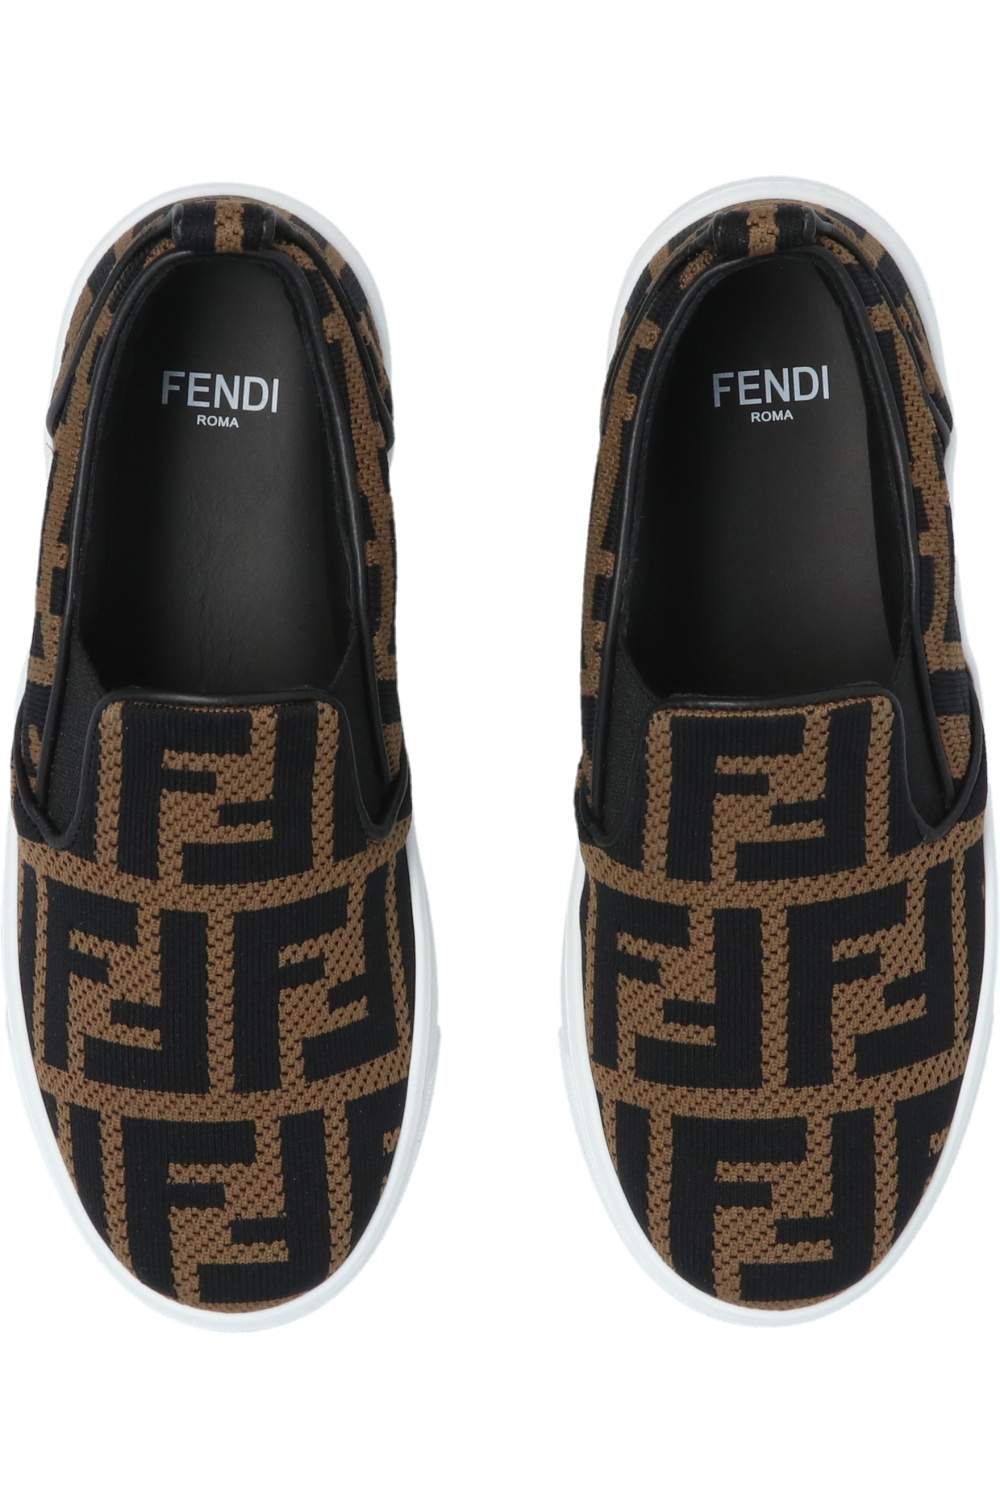 Fendi Kids Slip-on Choo shoes